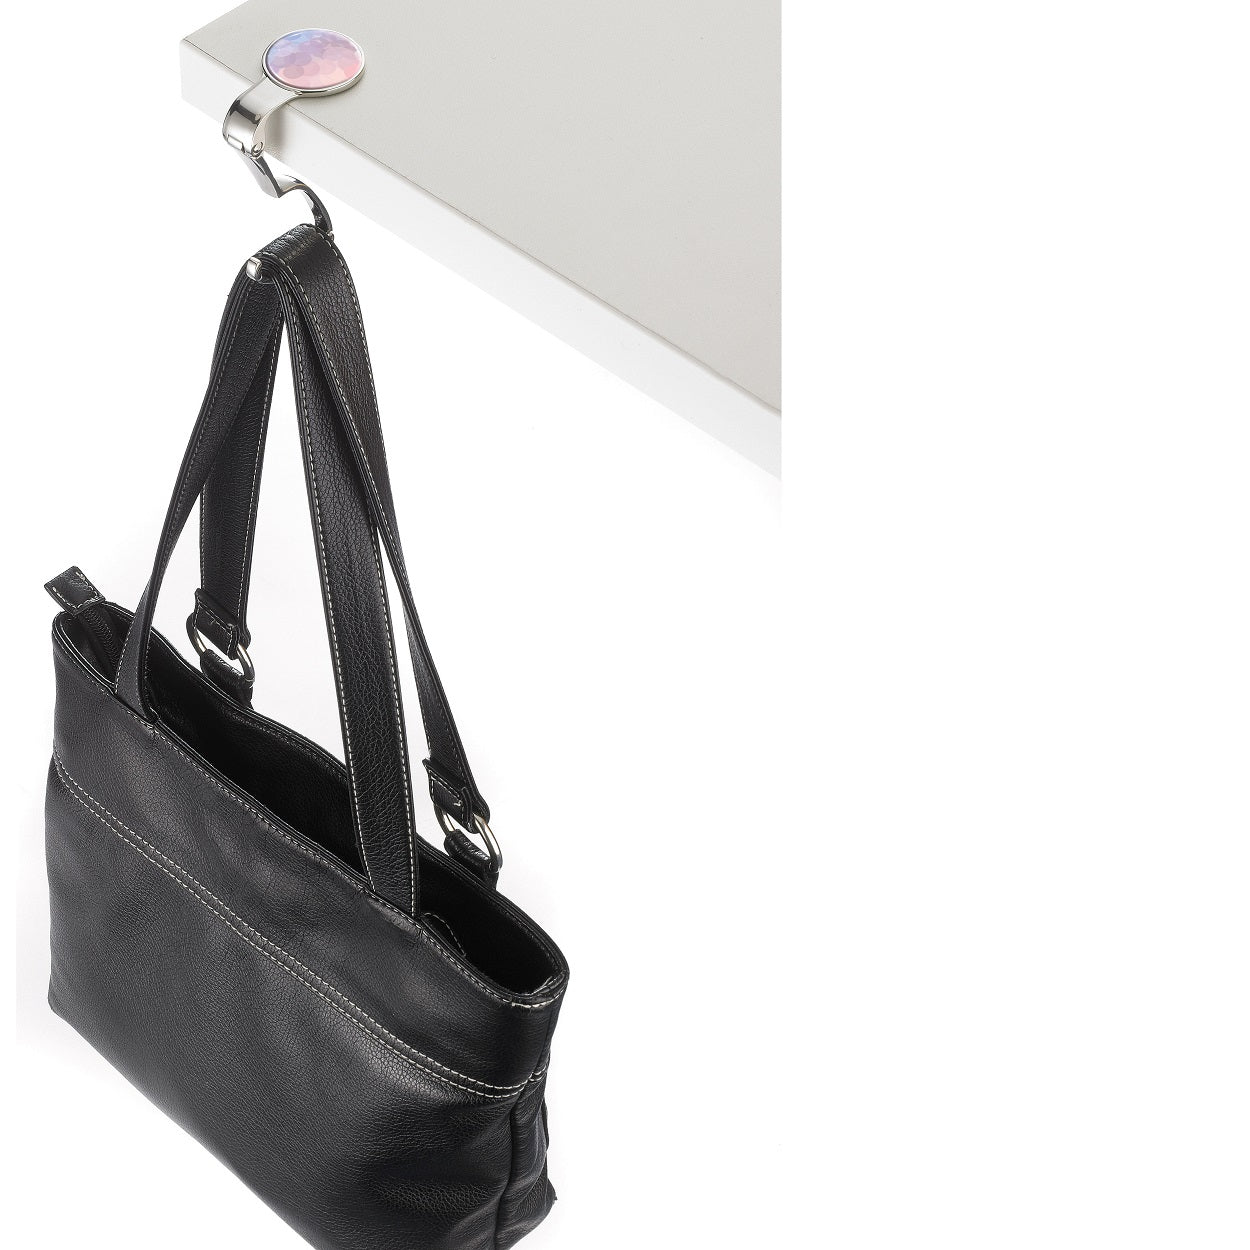 TROIKA Handbag Holder with Bag Clip – Serenity Rose